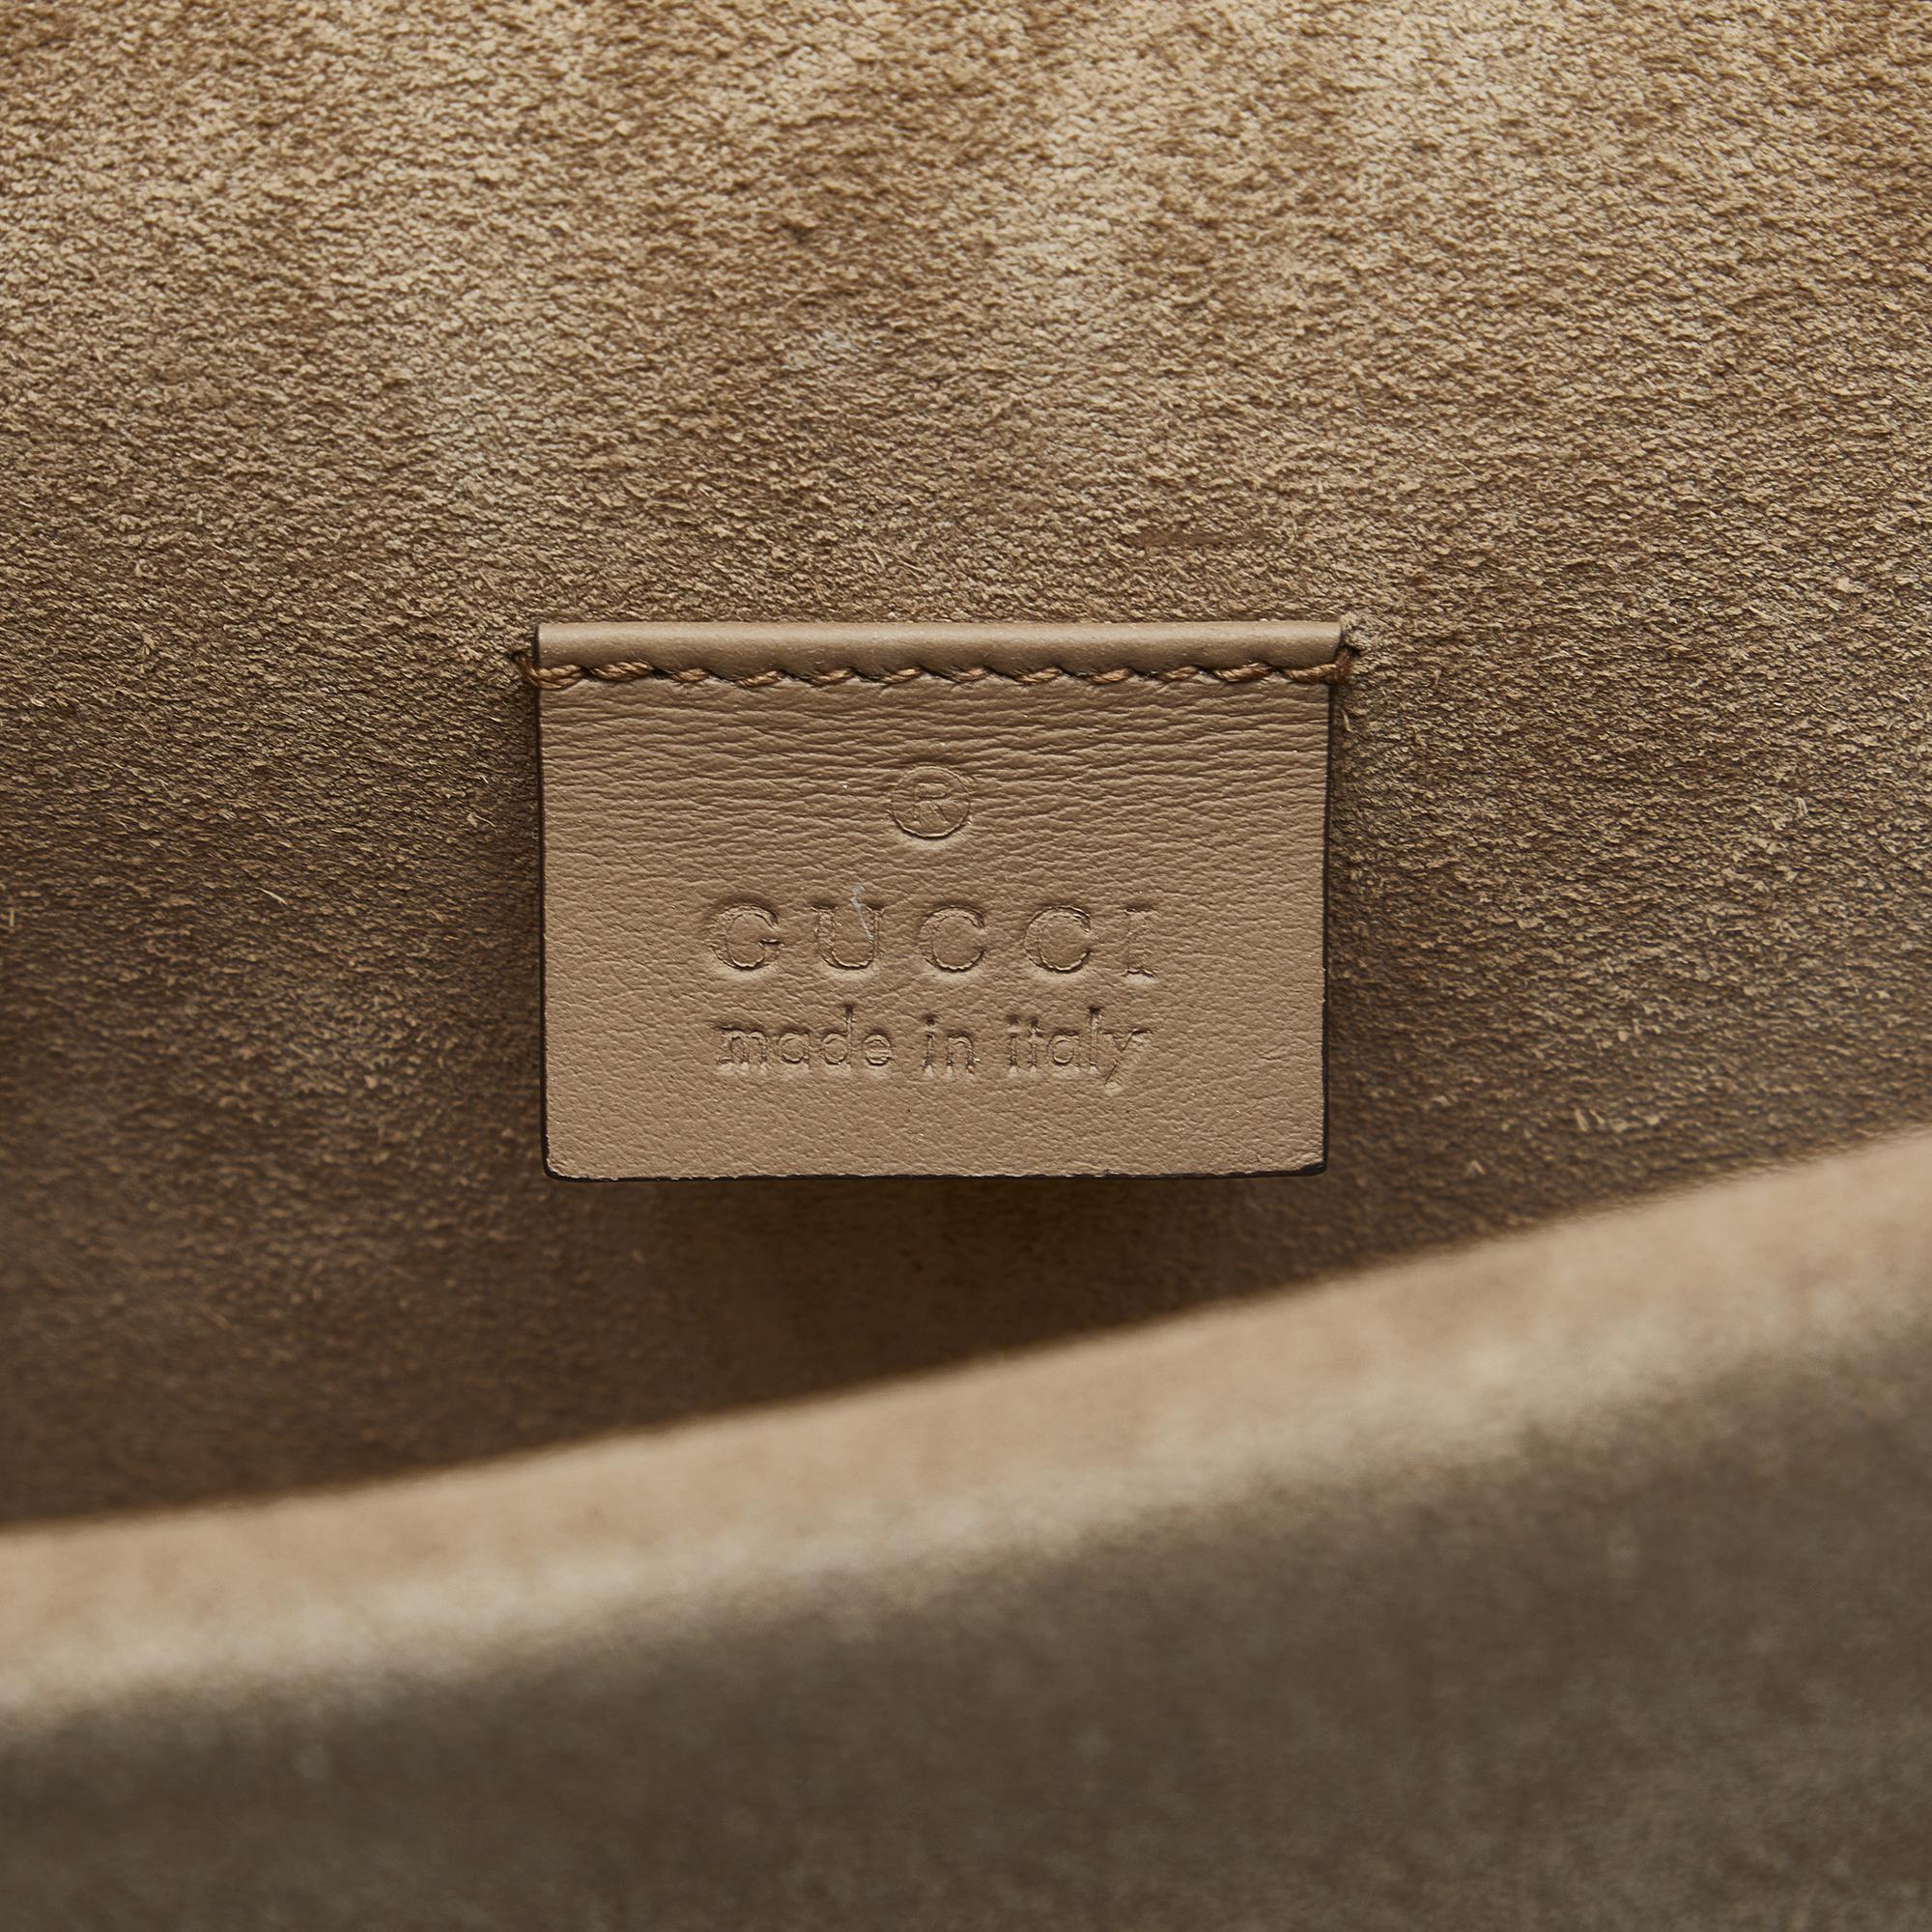 Gucci Beige/Brown Mini GG Supreme Dionysus Crossbody Bag